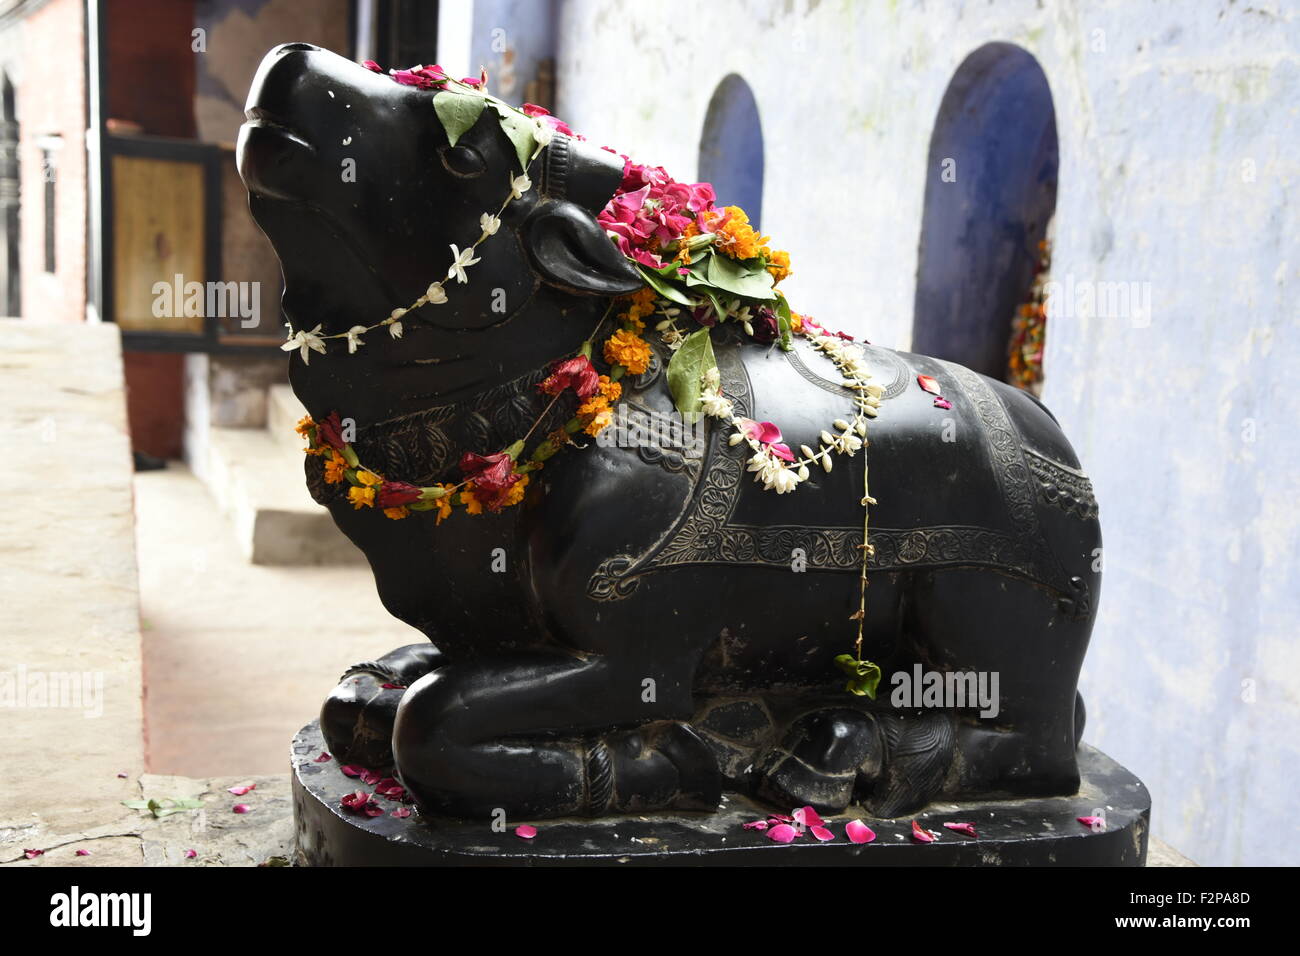 shiva or pashupatinath sacred Nandi full side face Black color with Flower Varanasi Uttar Pradesh India Asia or the sacred bull Stock Photo